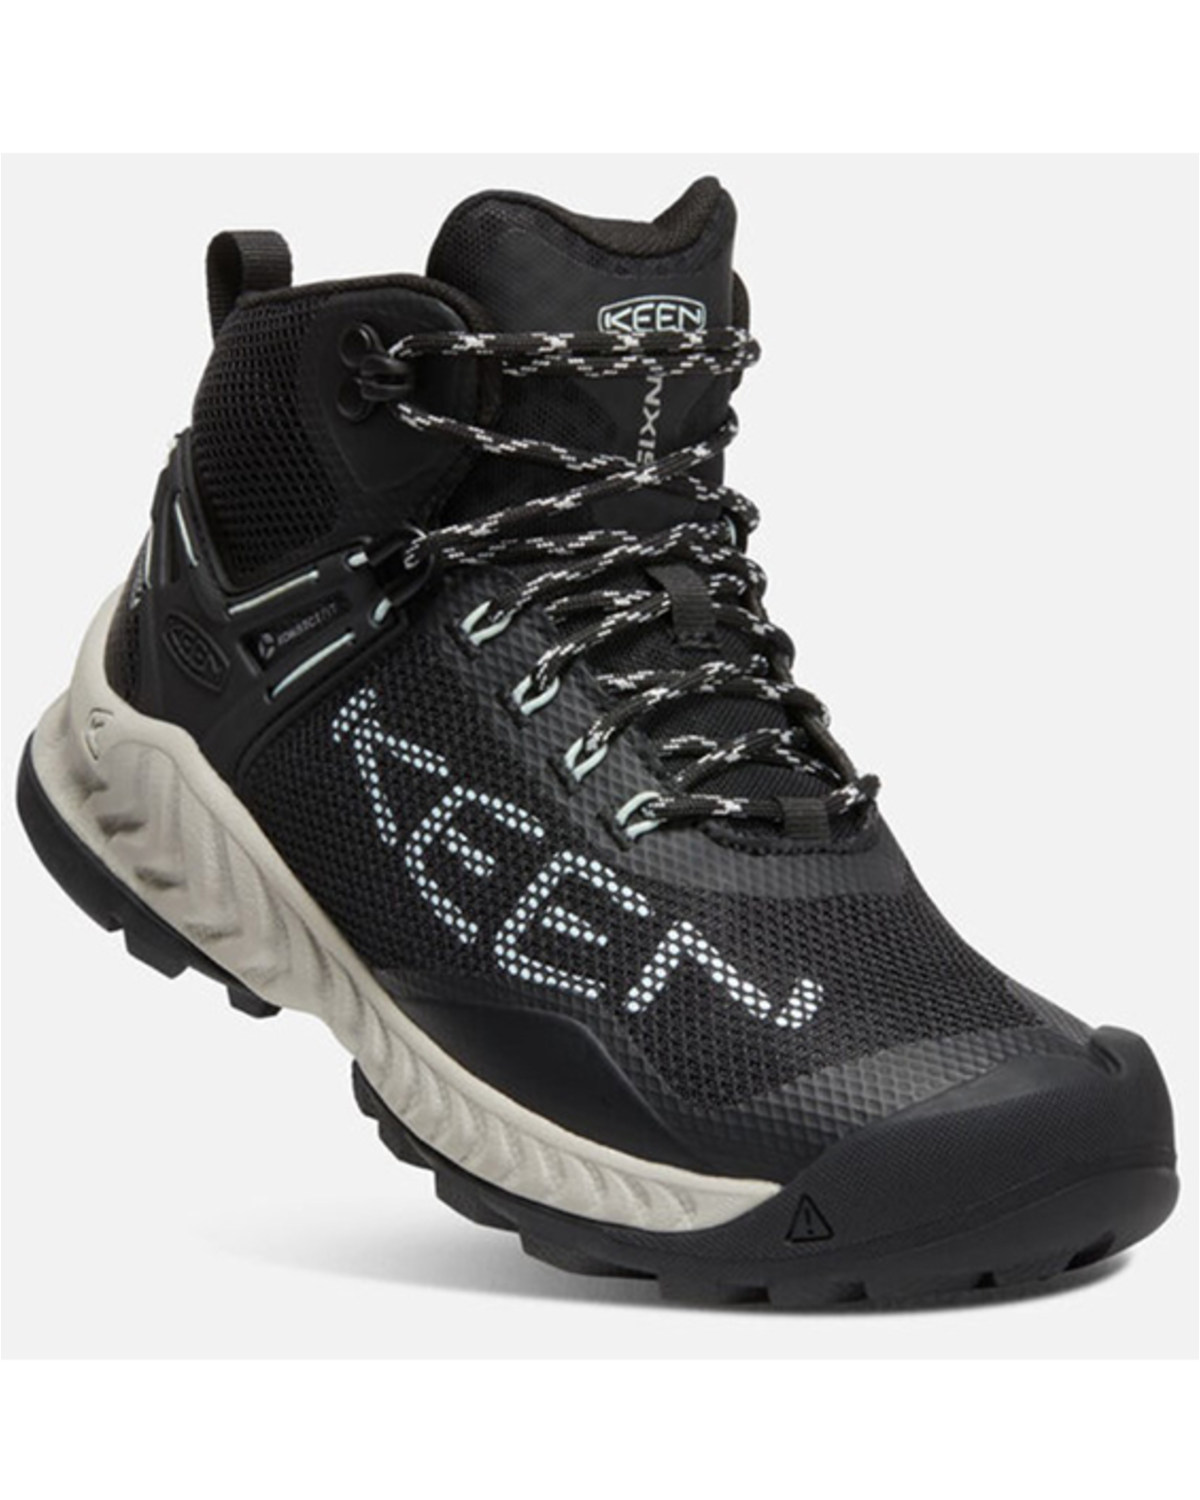 Keen Women's NXIS EVO Waterproof Hiking Shoes